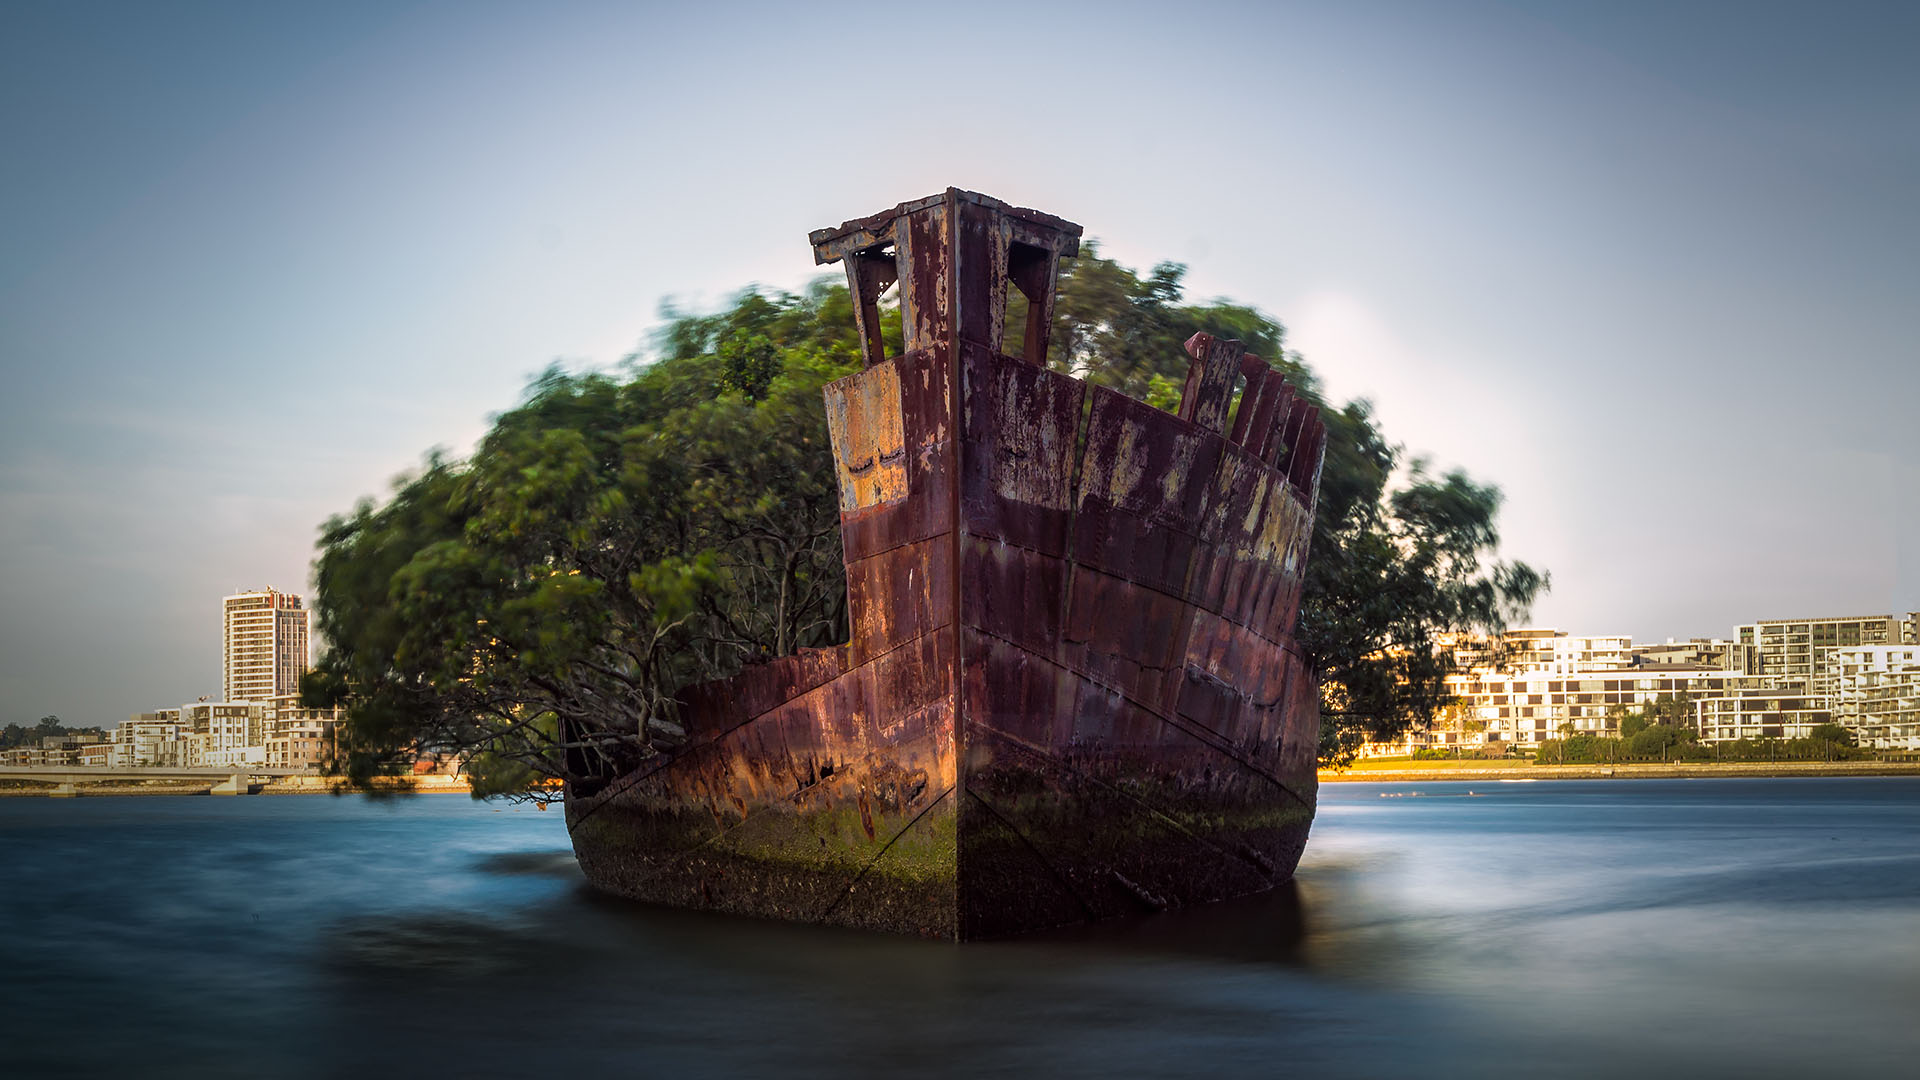 General 1920x1080 trees Sydney Australia shipwreck long exposure coral reef Homebush Bay